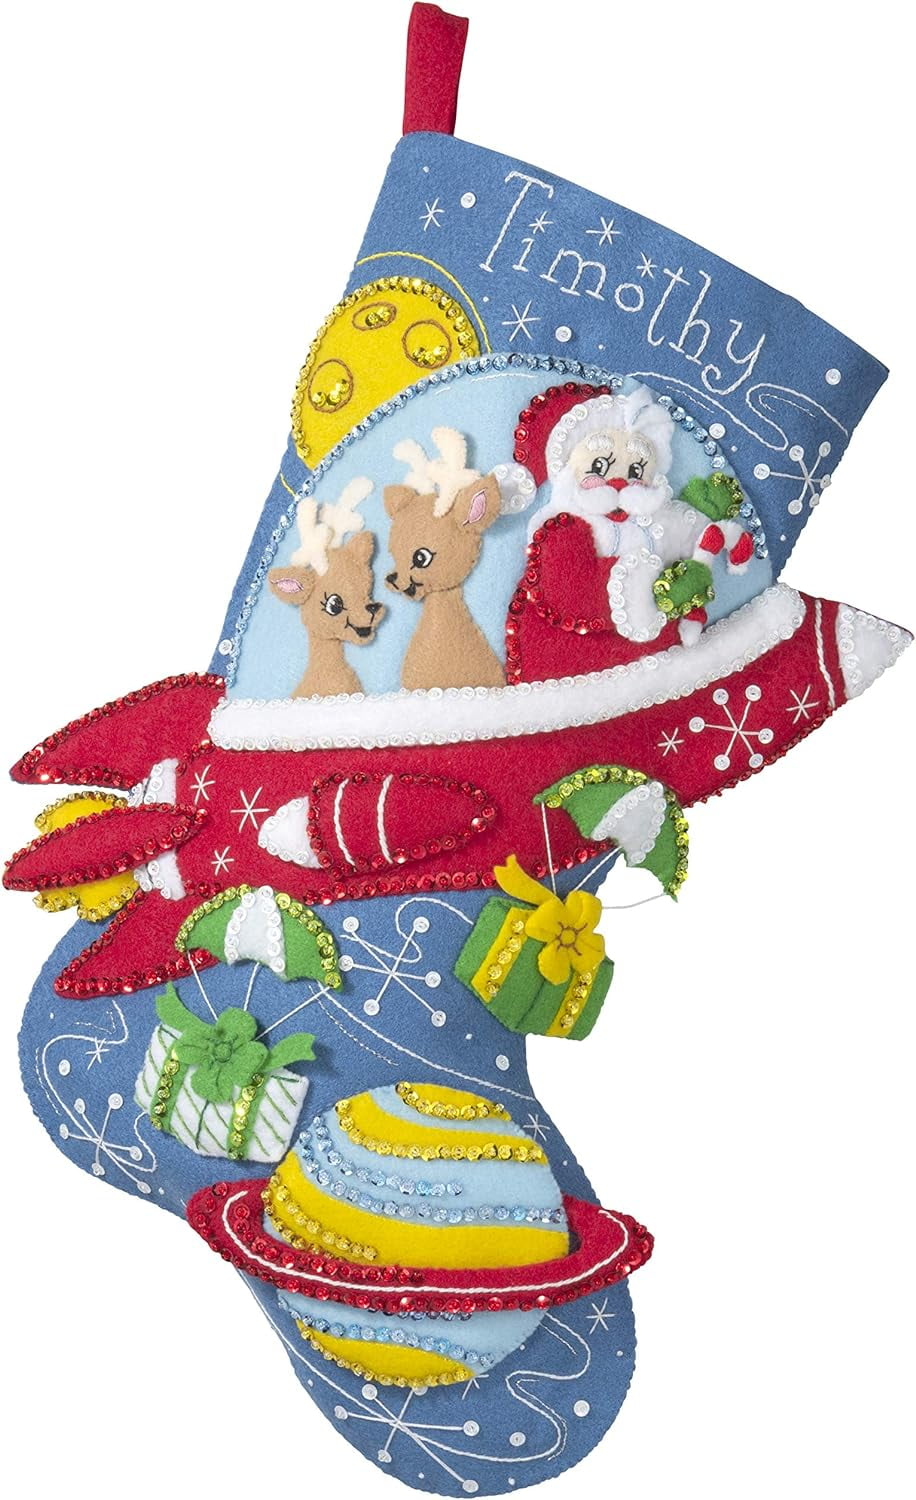 Bucilla ® Seasonal - Felt - Stocking Kits - Santa's Balloon Ride 89467 –  Creative Wholesale